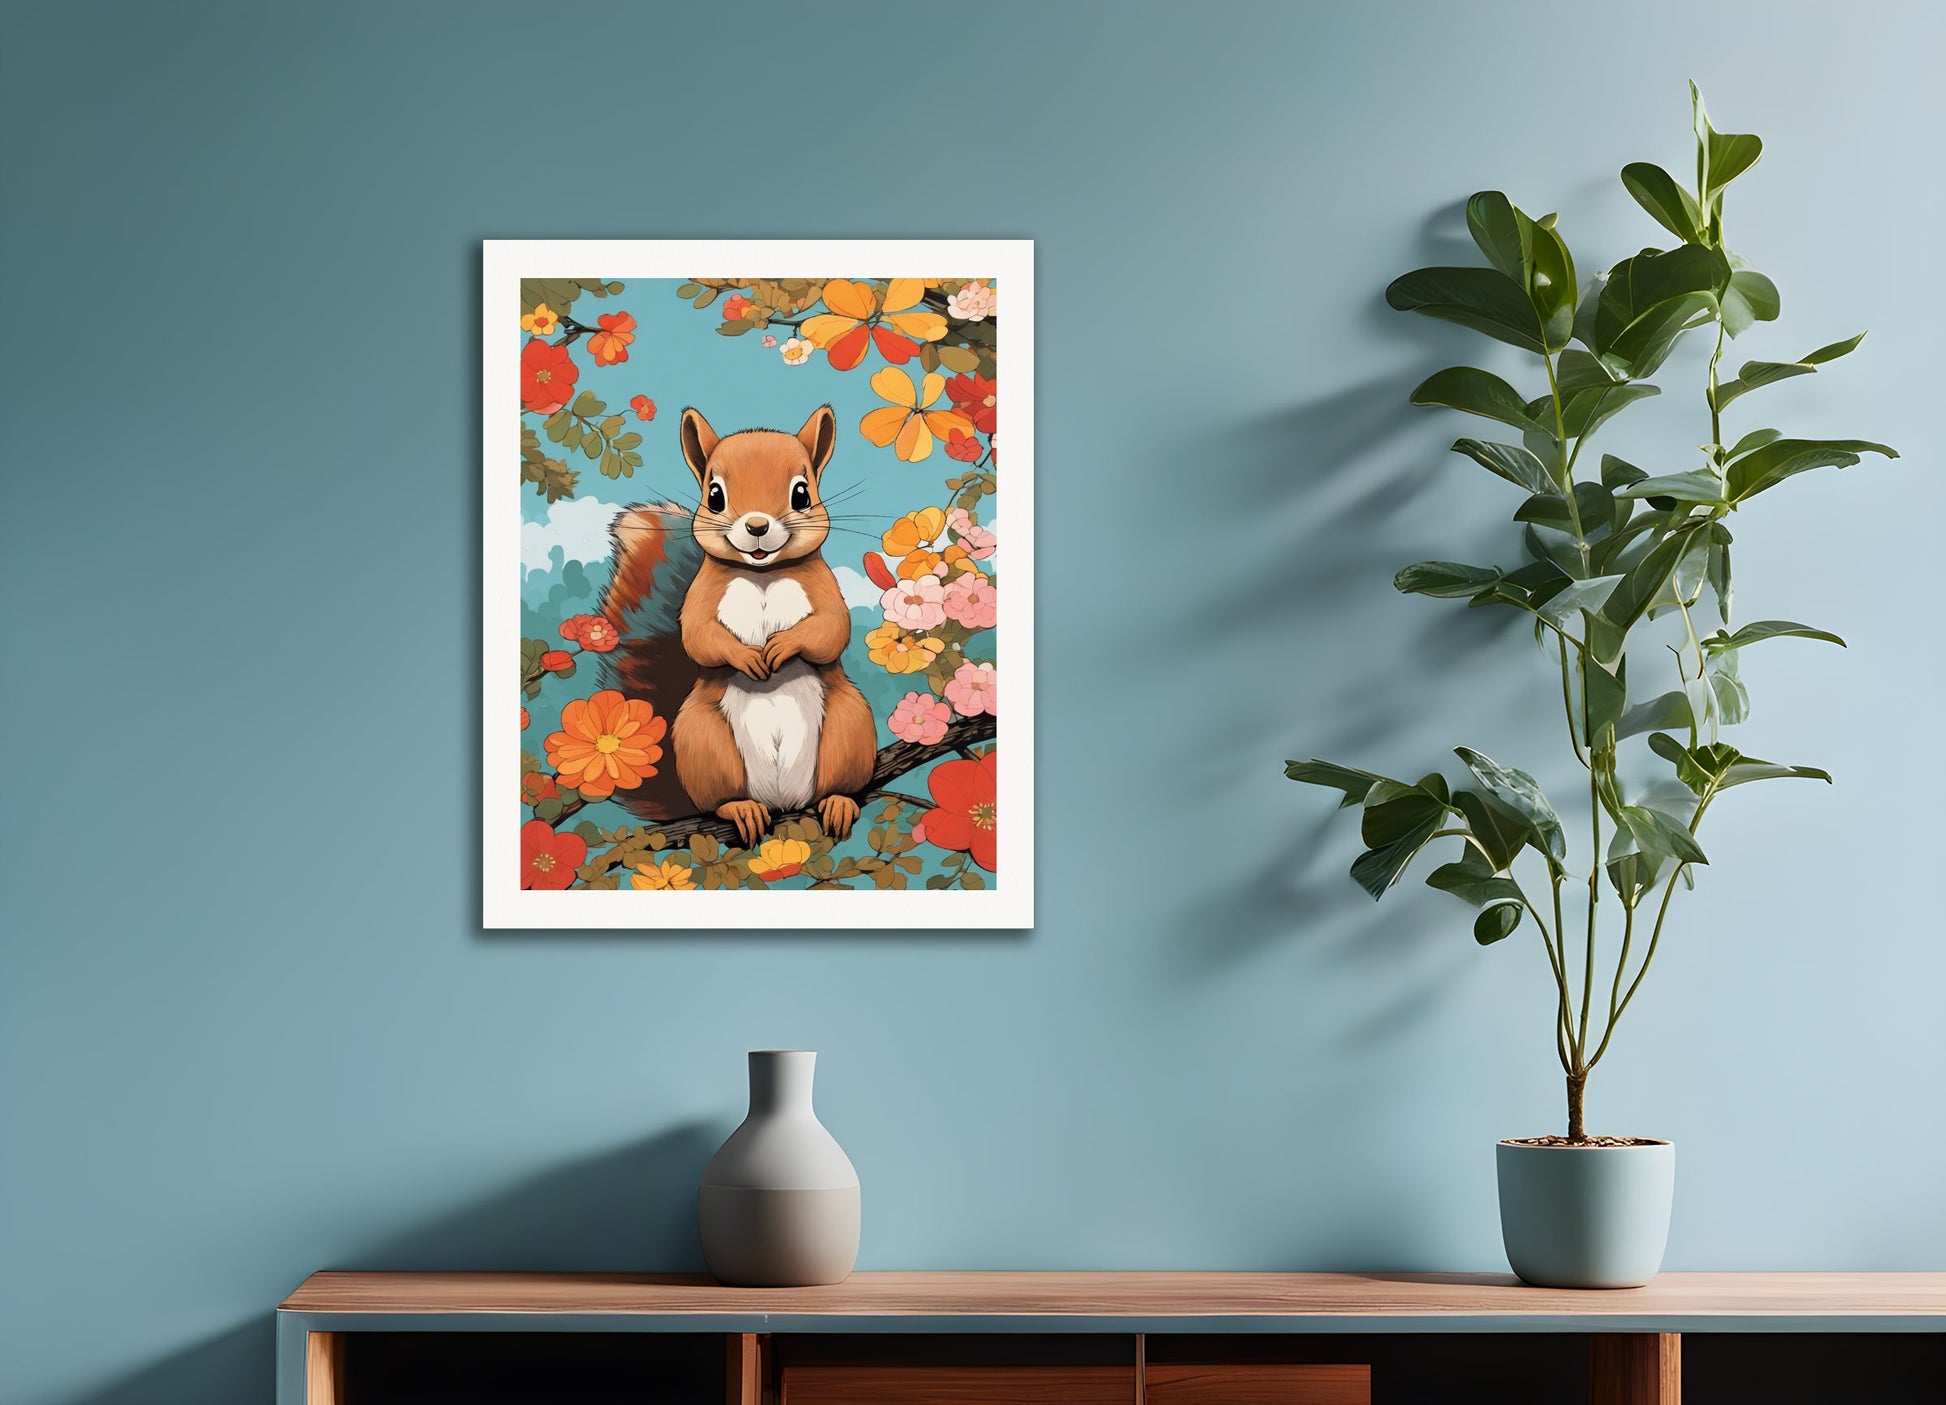 Poster: Japanese contemporary Kawaii artist, Squirrel